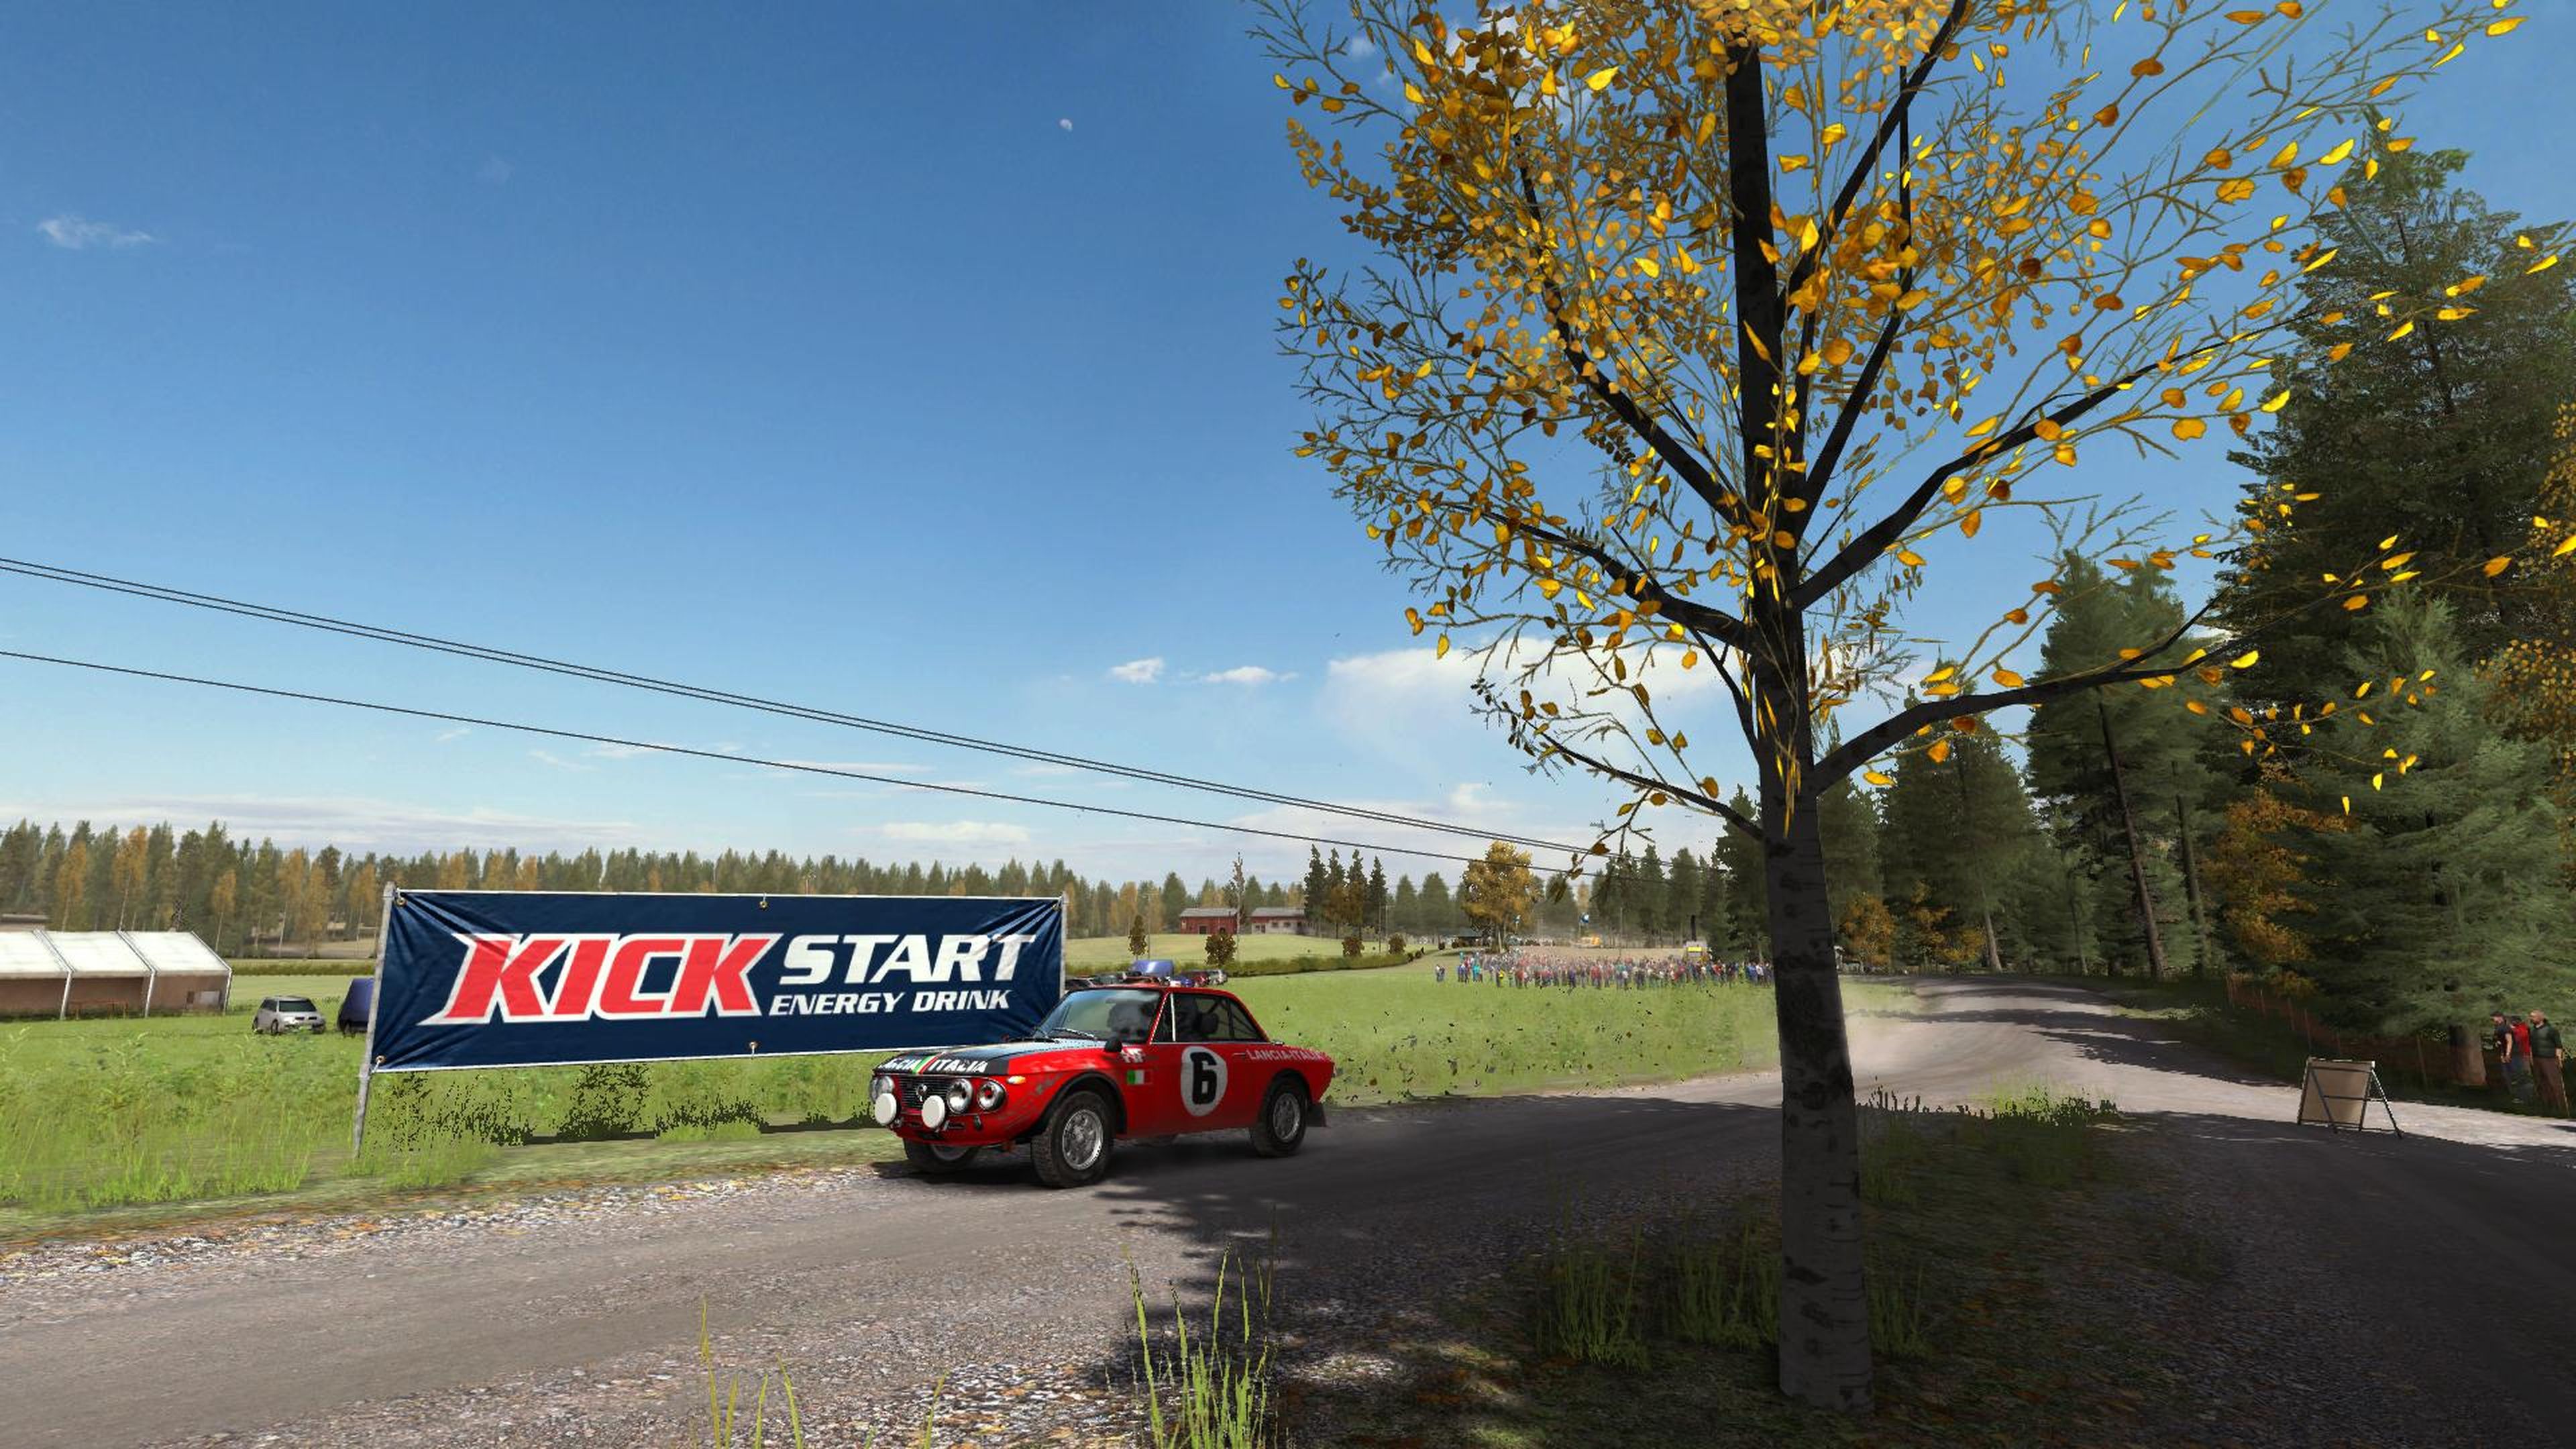 Análisis de Dirt Rally para PC